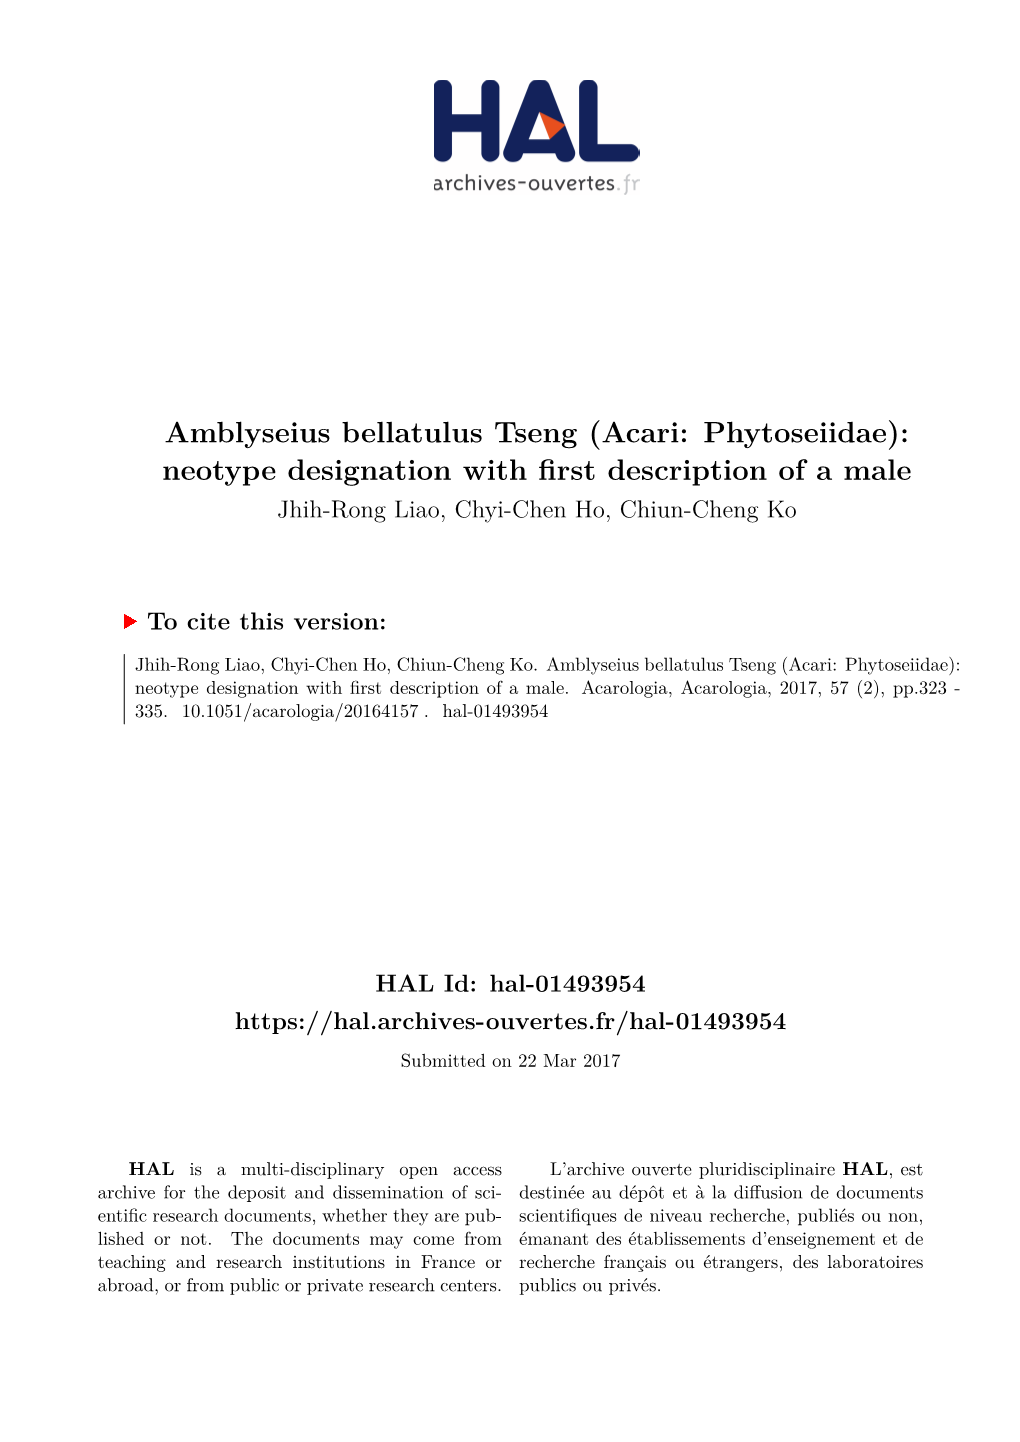 Amblyseius Bellatulus Tseng (Acari: Phytoseiidae): Neotype Designation with First Description of a Male Jhih-Rong Liao, Chyi-Chen Ho, Chiun-Cheng Ko